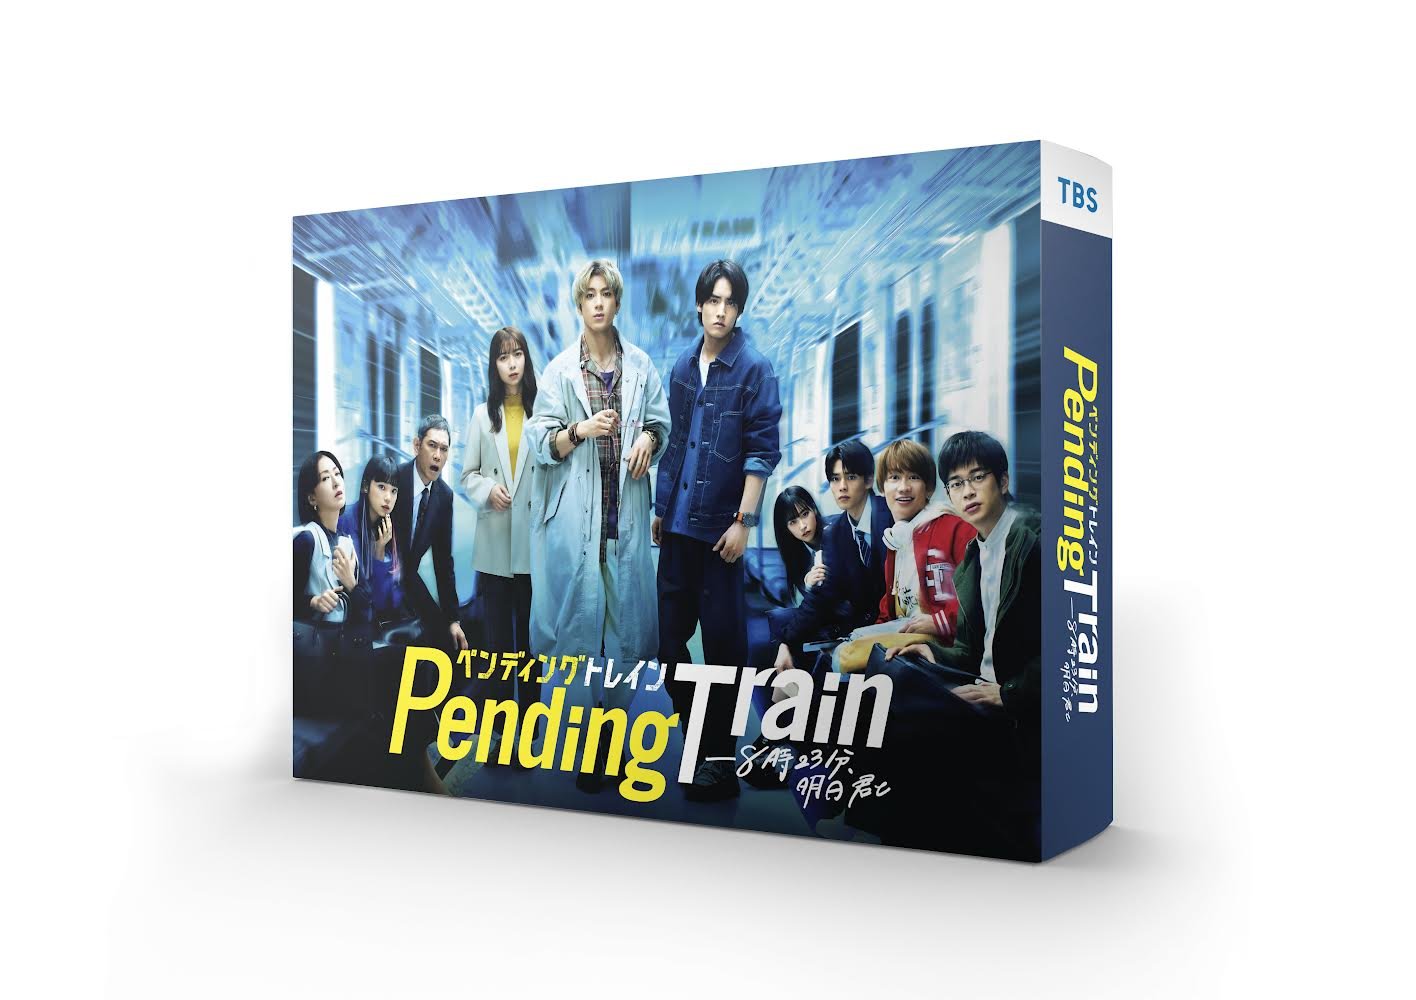 Pending Train-8 Ji 23 Pun.asu Kimi to Dvd-box Japan Import edition